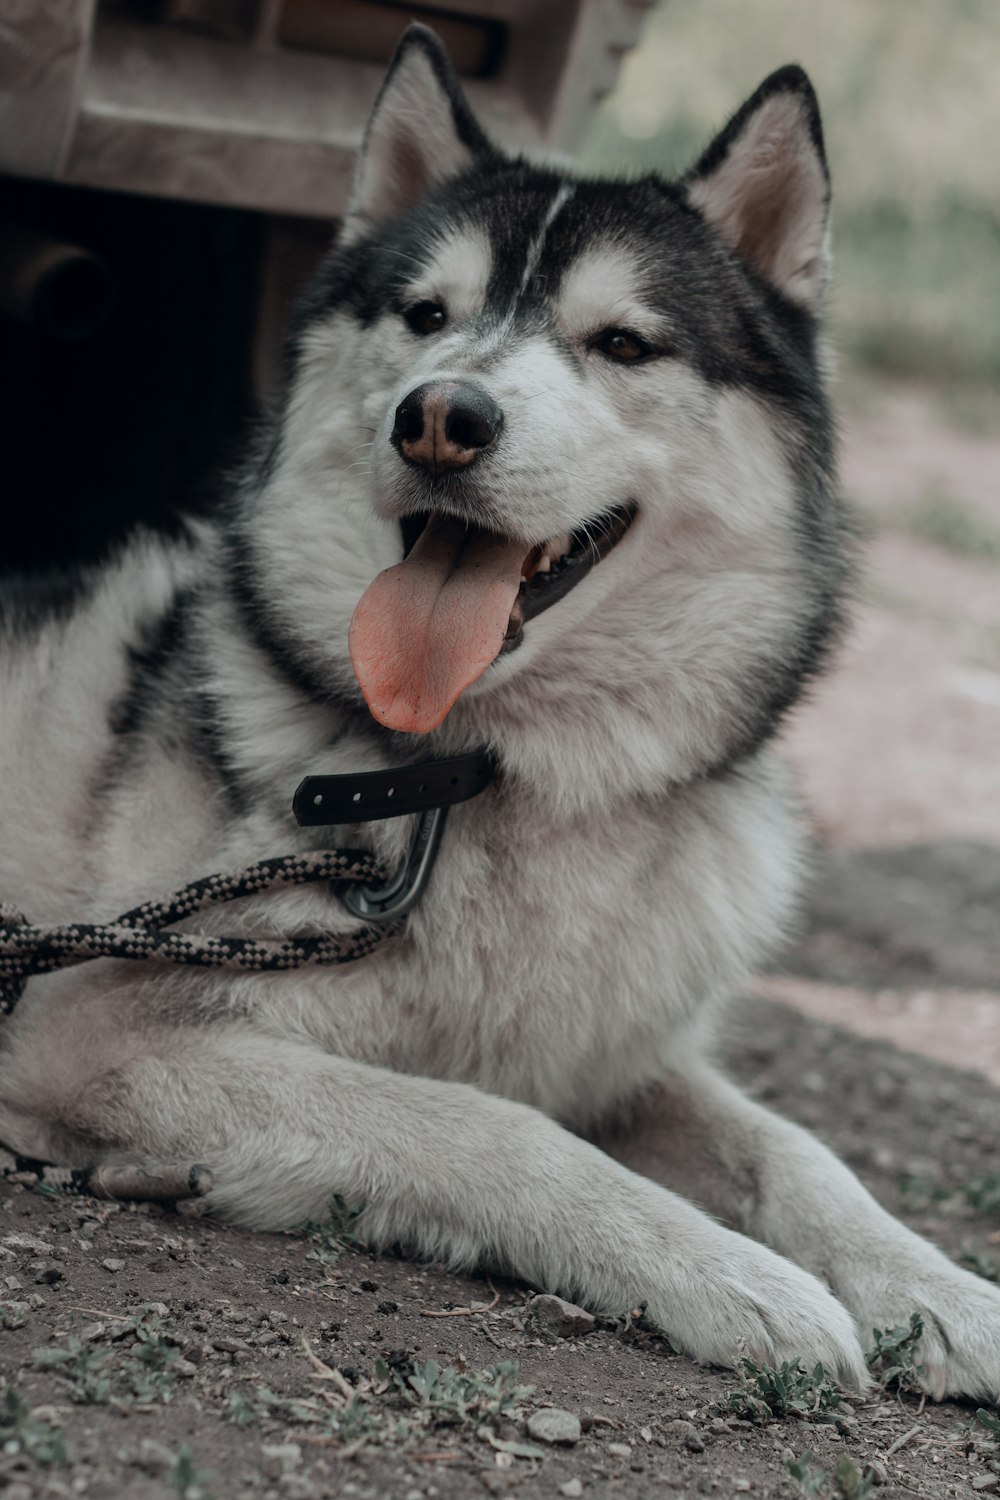 a dog with a leash